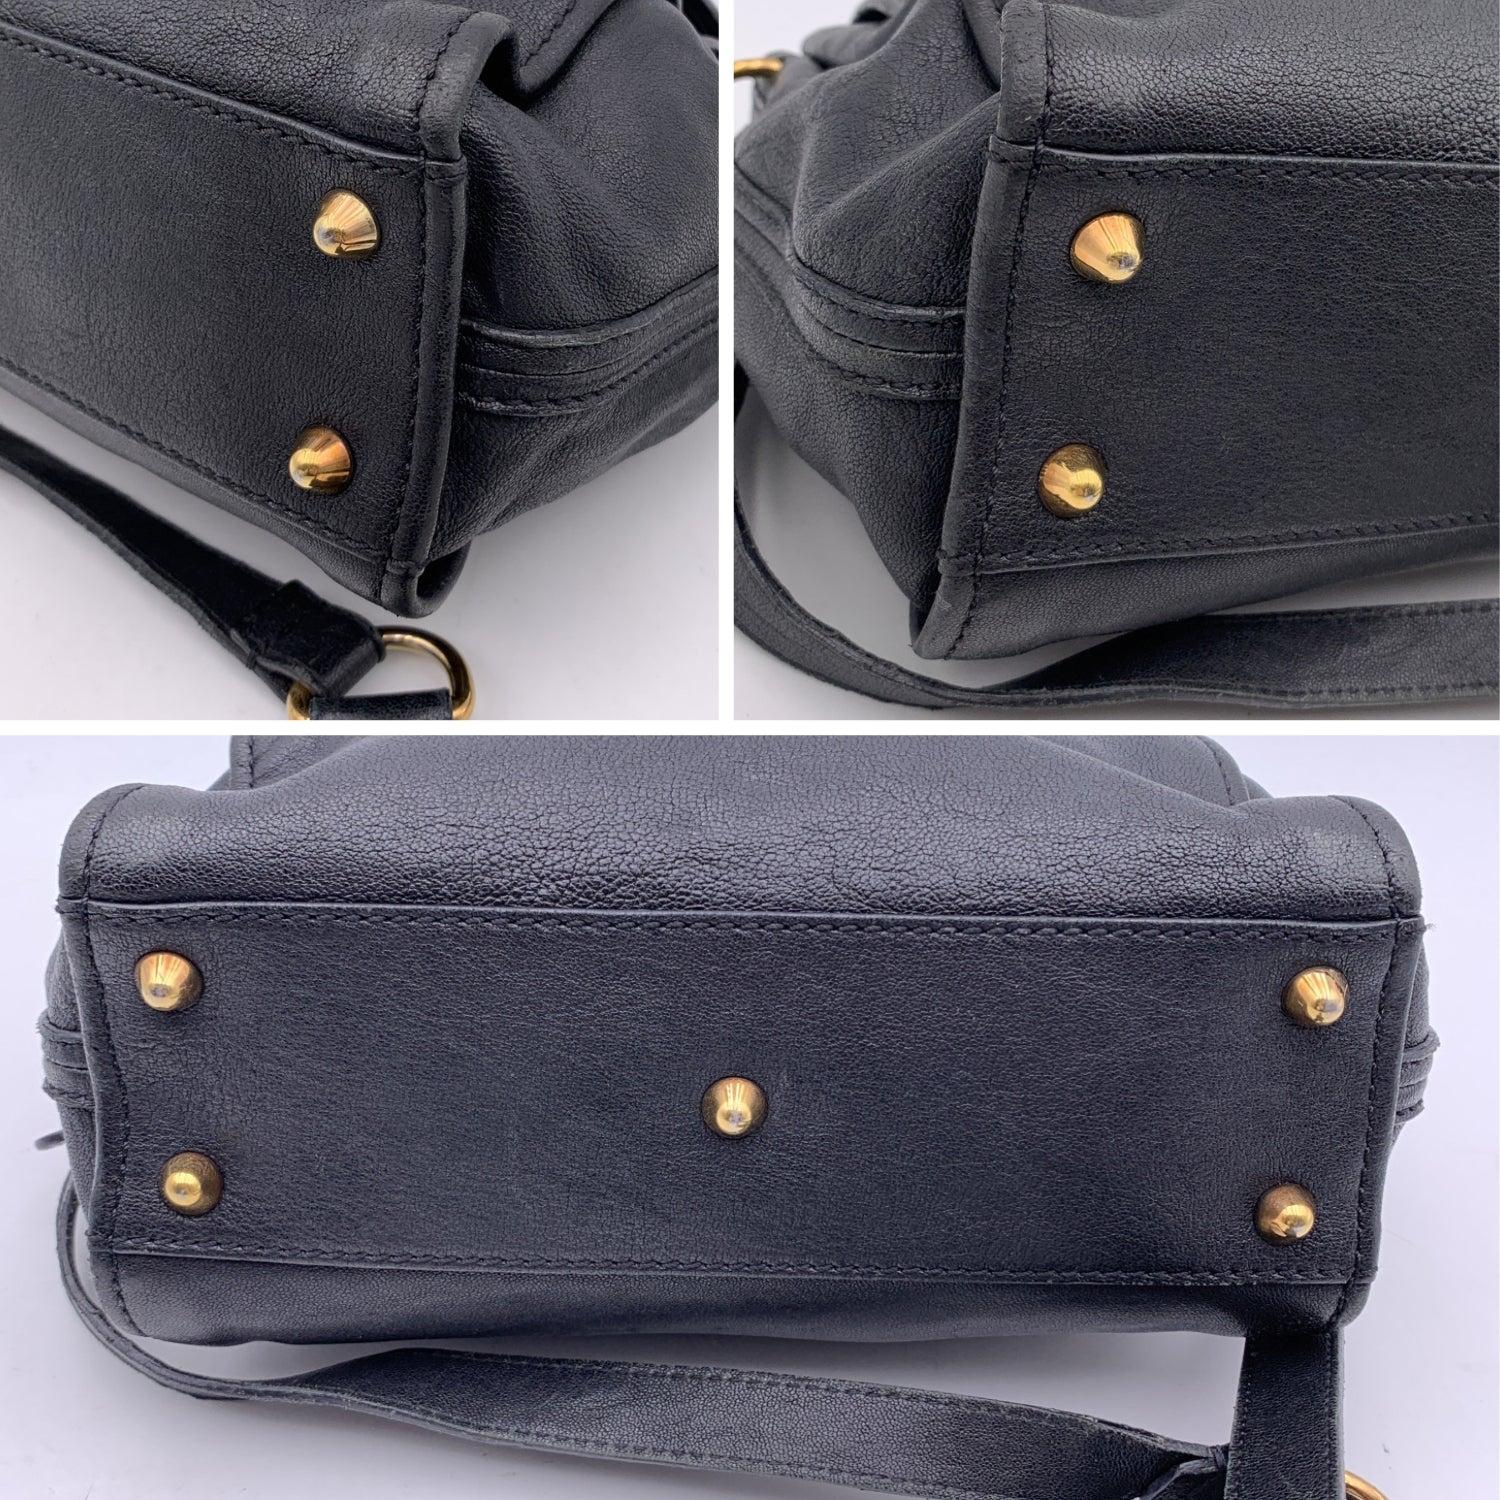 Women's Chloe Black Leather Elsie Bag Tote Satchel Handbag with Strap